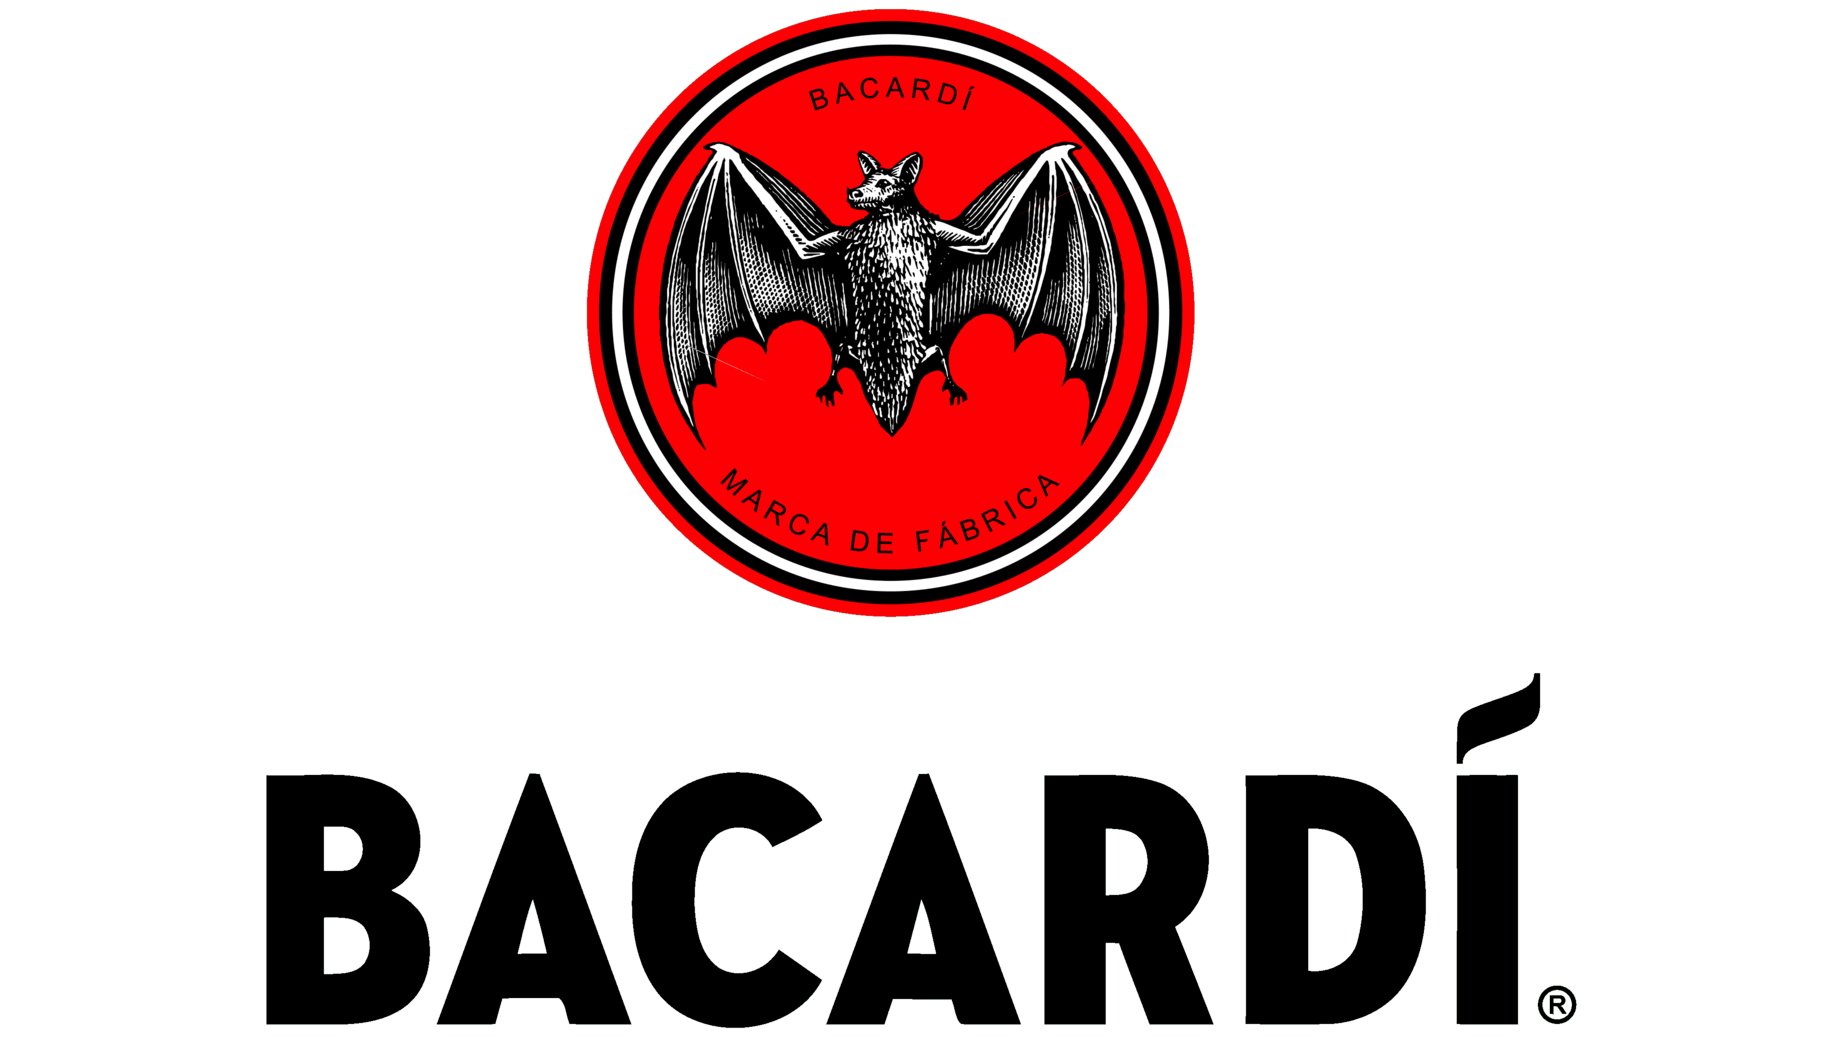 Bacardi symbol 1